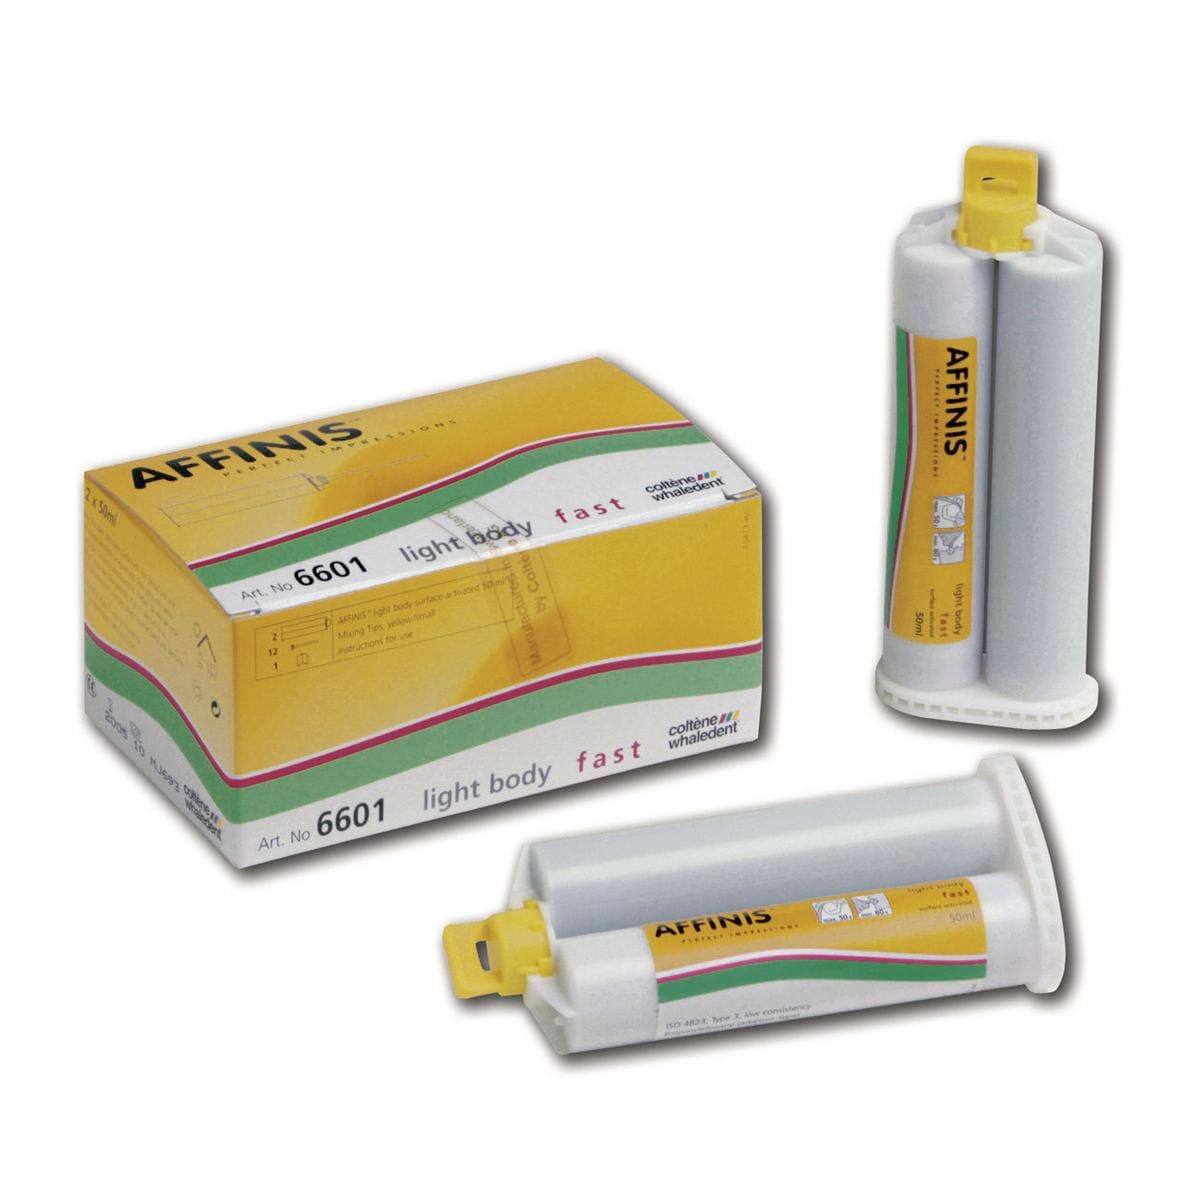 Affinis System - Light Fast Body, 2x 50 ml en 12 mengtips geel